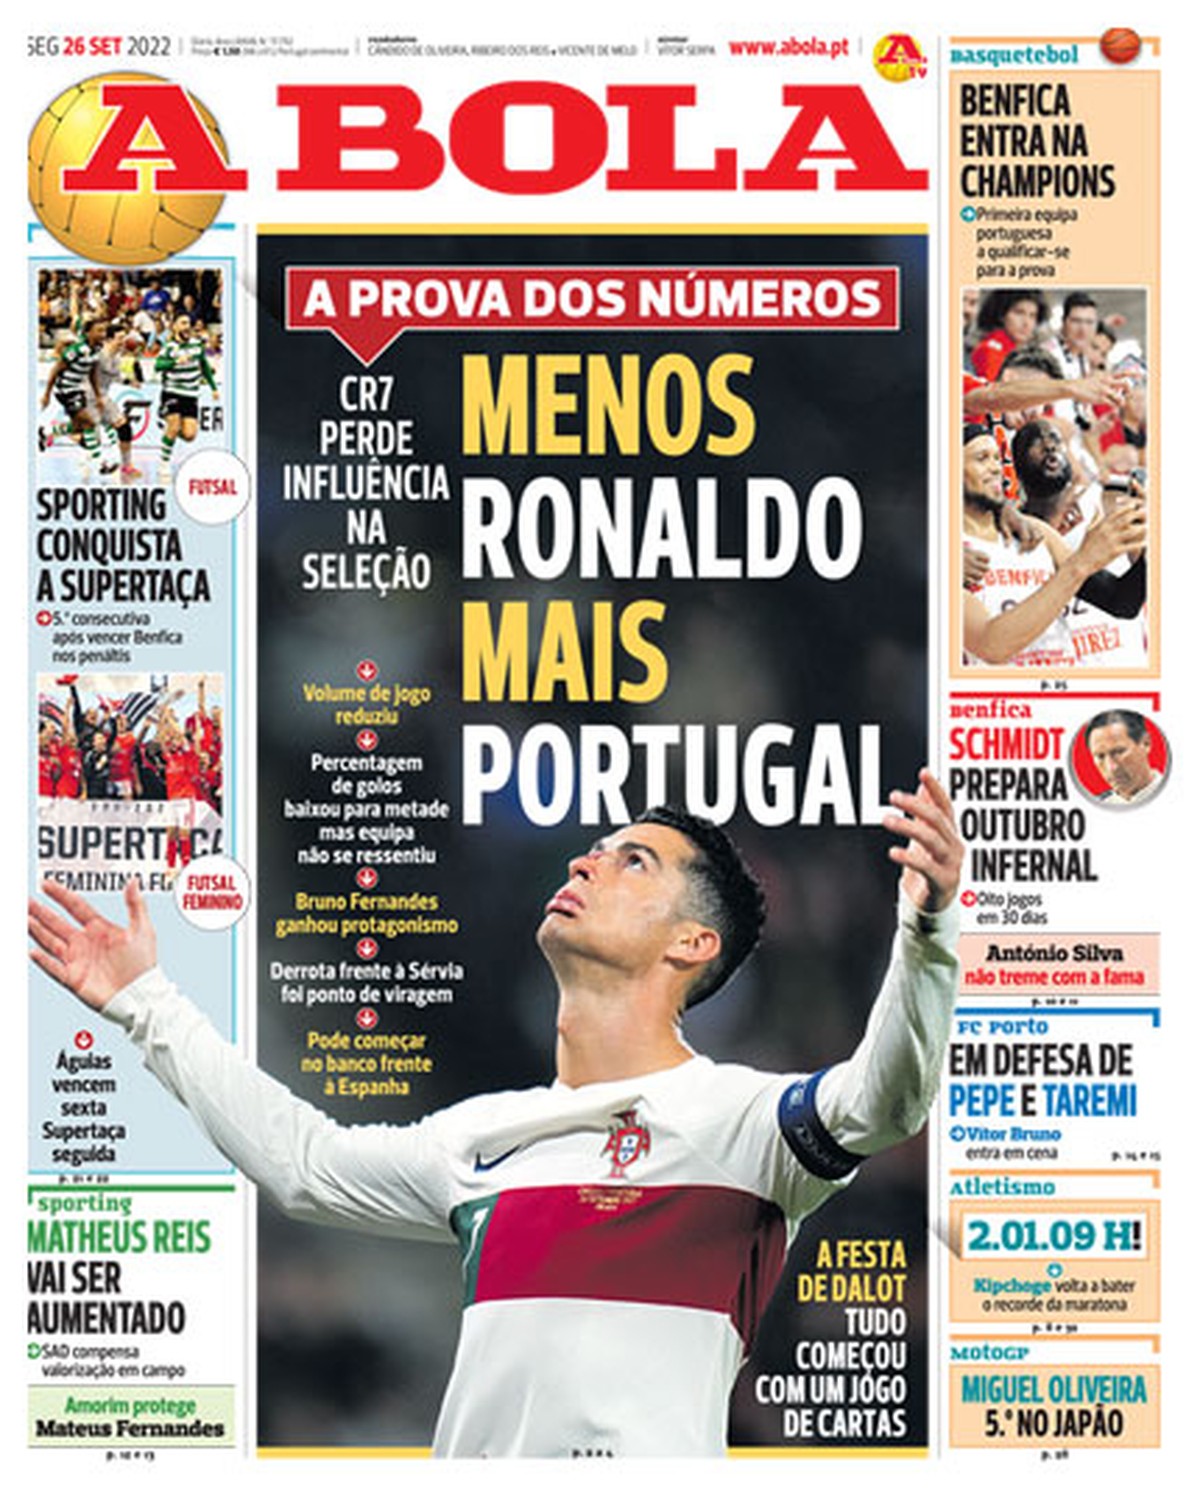 Portuguese newspaper criticizes CR7: "Less Ronaldo, more Portugal" |  international football